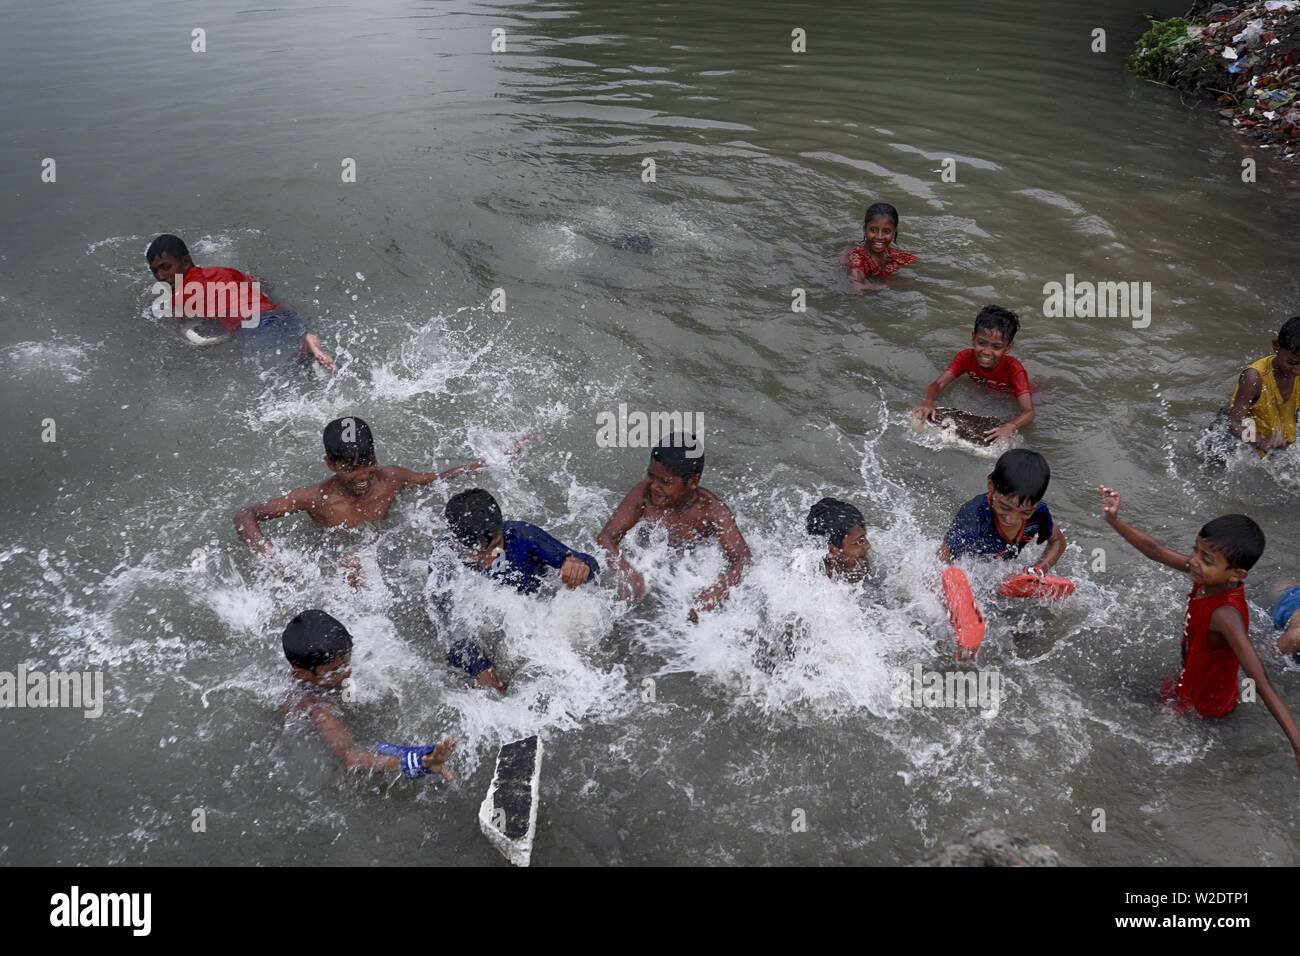 July 8, 2019 - Dhaka, Bangladesh - Children have fun while taking shower at the Buriganga River in Dhaka Bangladesh. (Credit Image: © Kazi Salahuddin via ZUMA Wire) Stock Photo